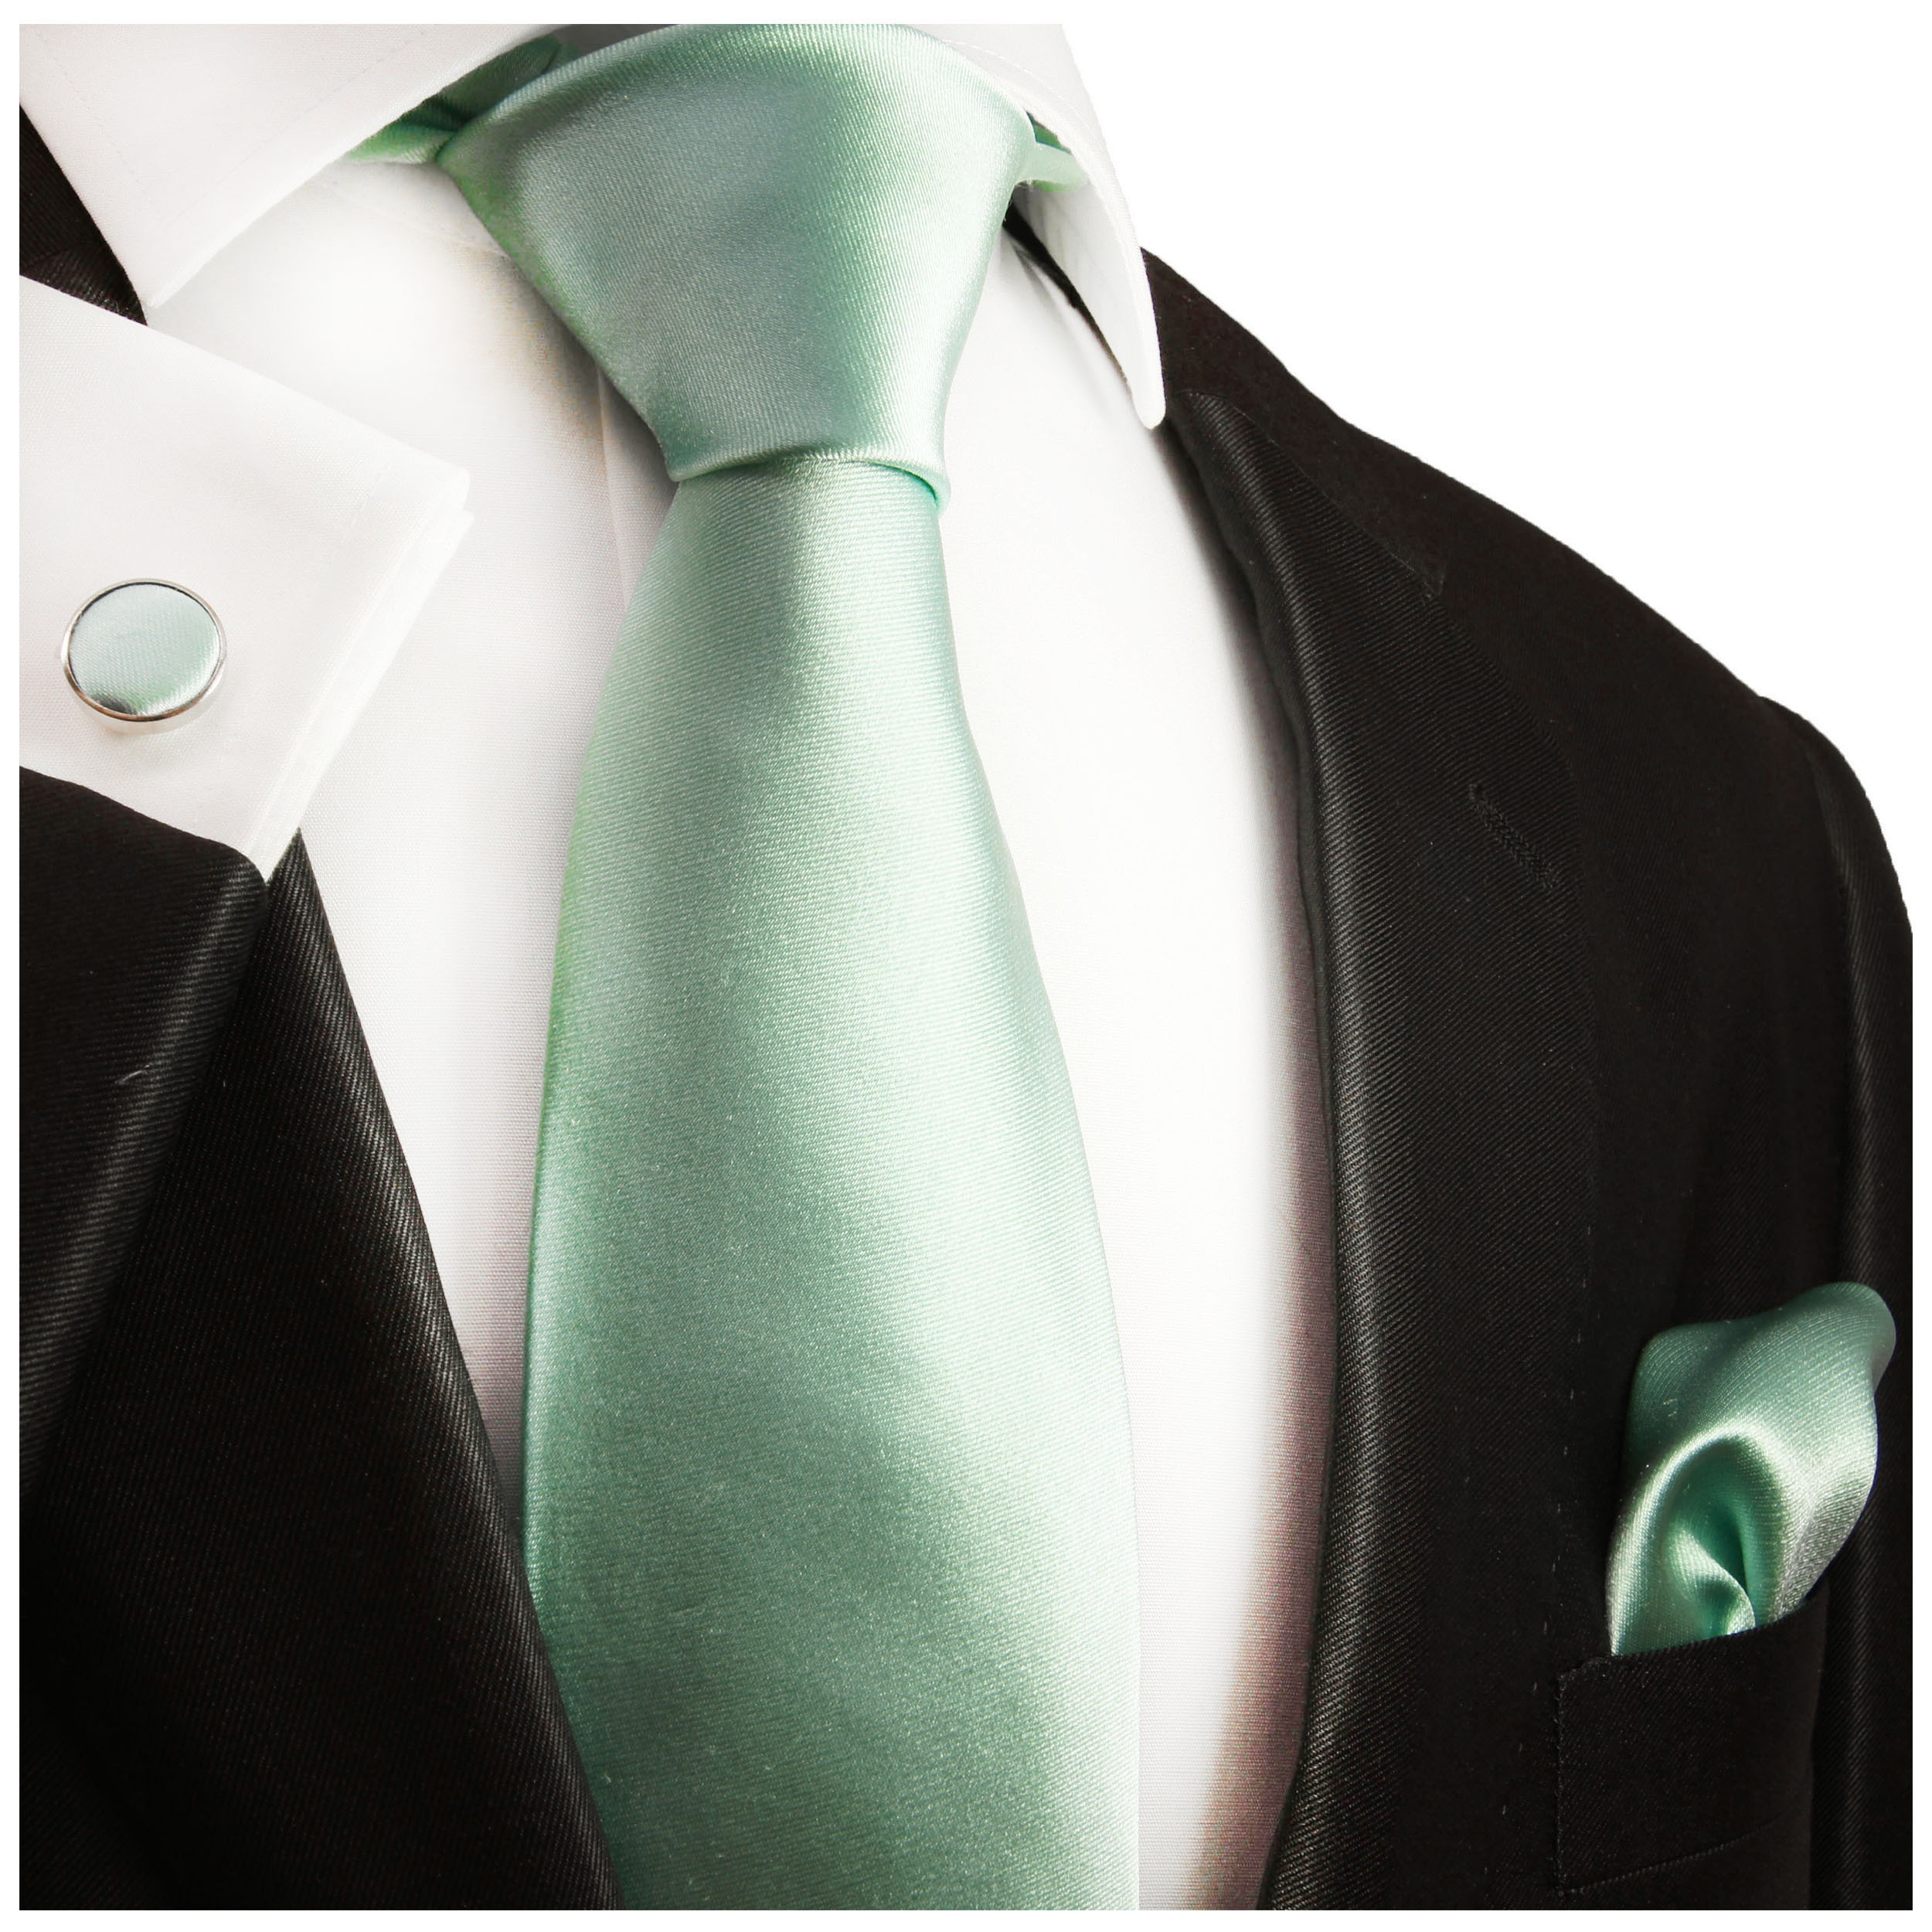 Krawatte mint grün uni 488 | JETZT BESTELLEN - Paul Malone Shop